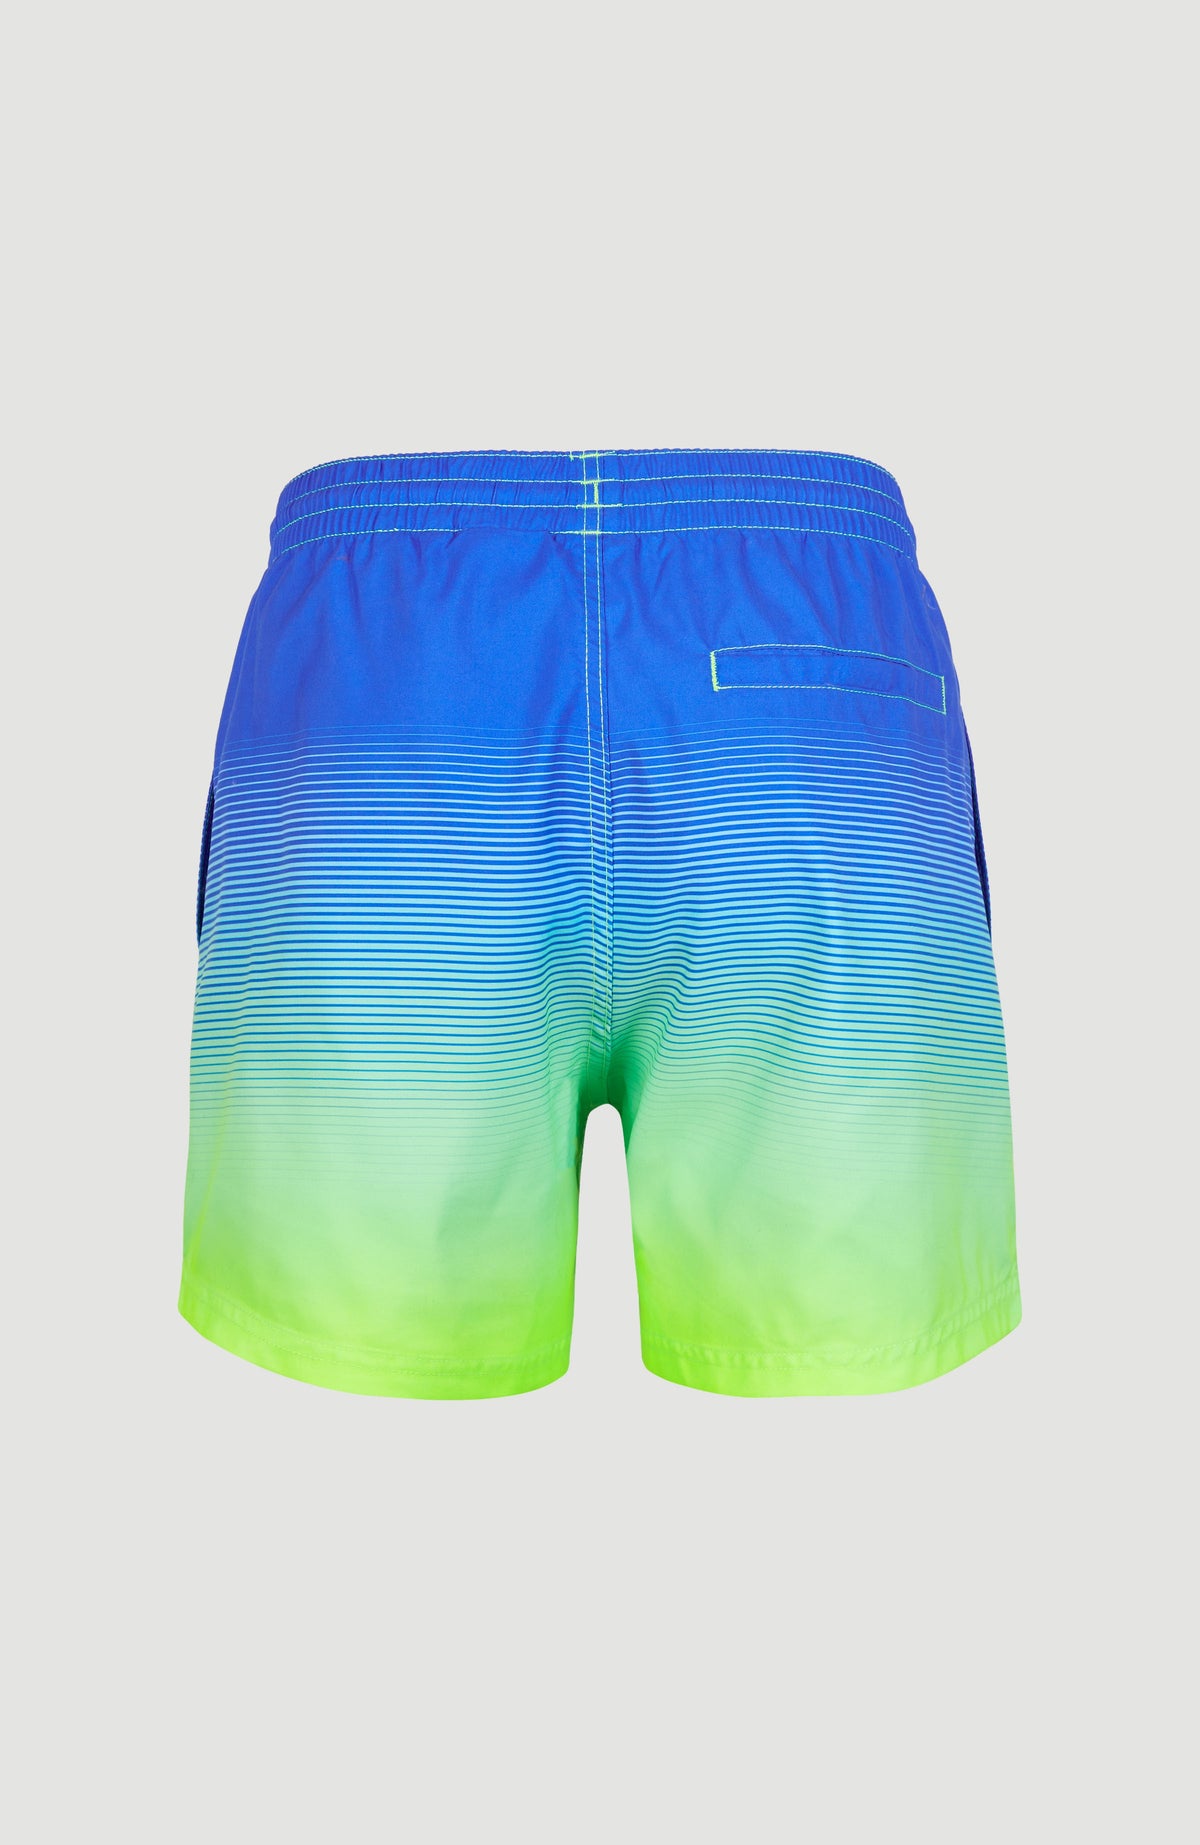 Gradient Blue Purple Pink Men's Beach Shorts Swim Trunks Quick Dry Swim  Board Shorts with Pockets S